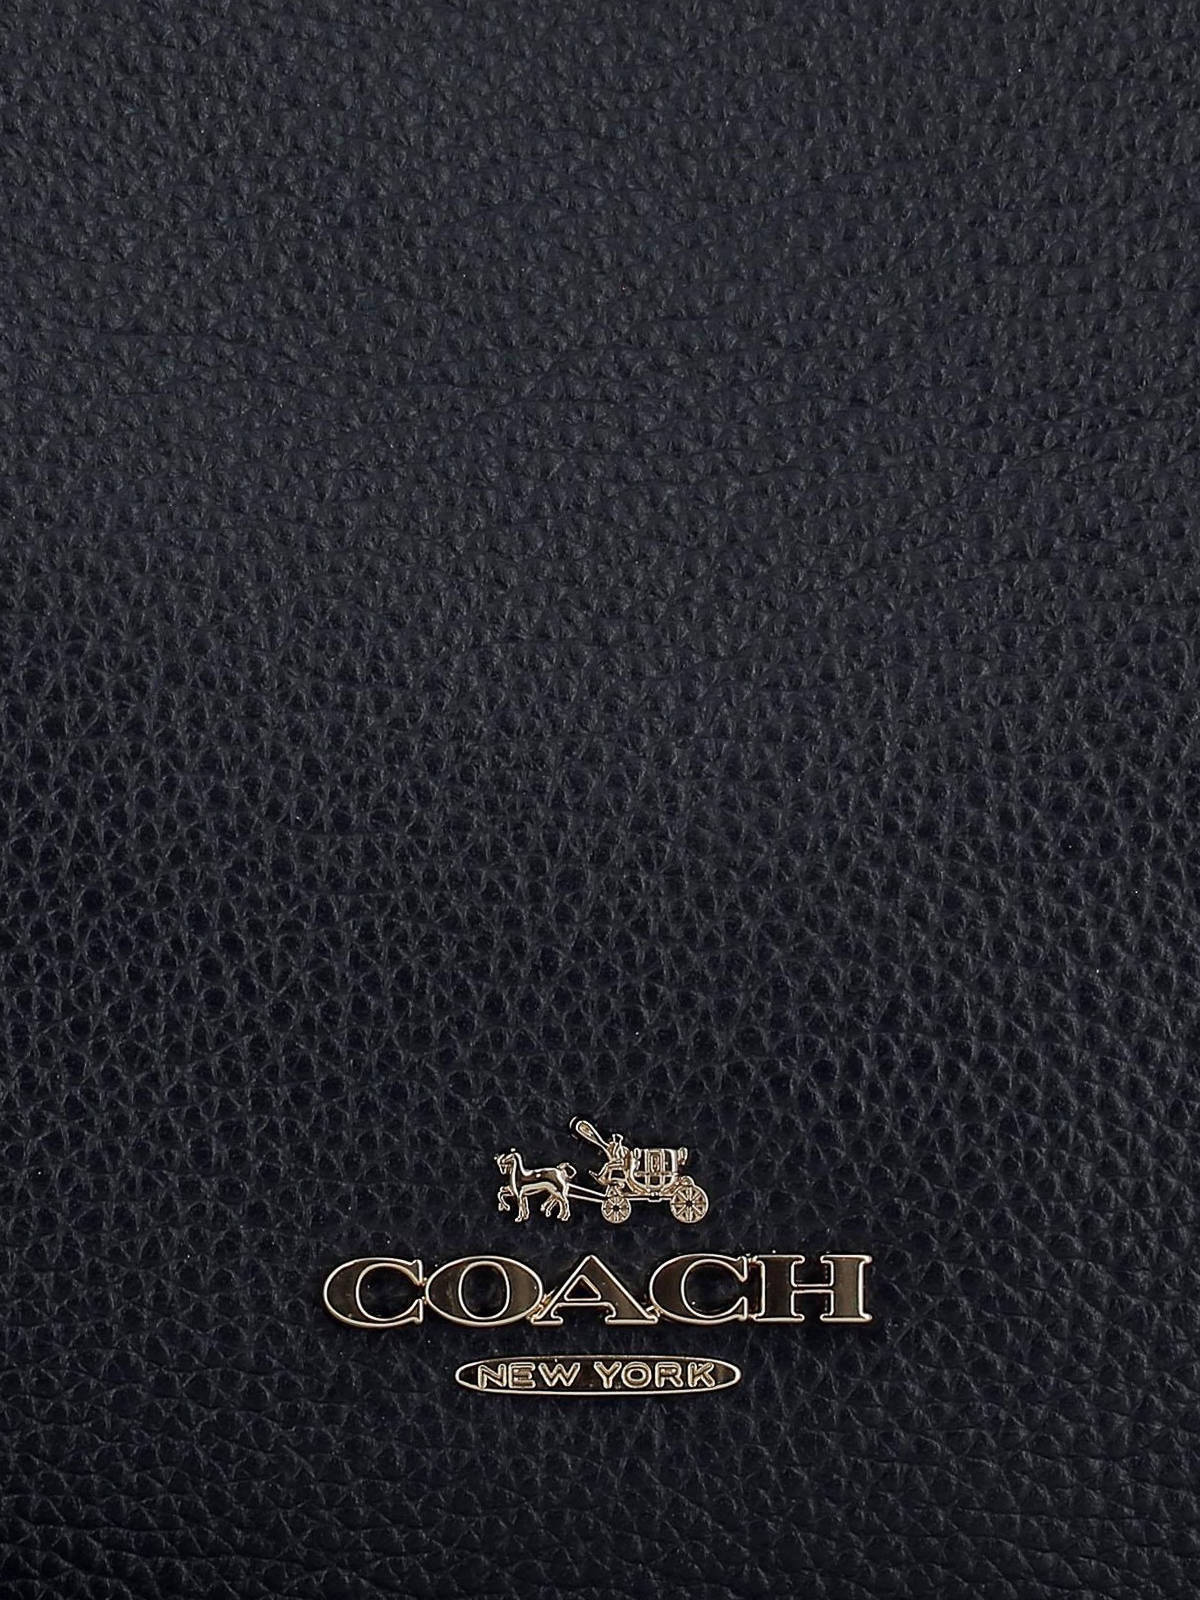 Coach Logo On Black Leather Wallpaper